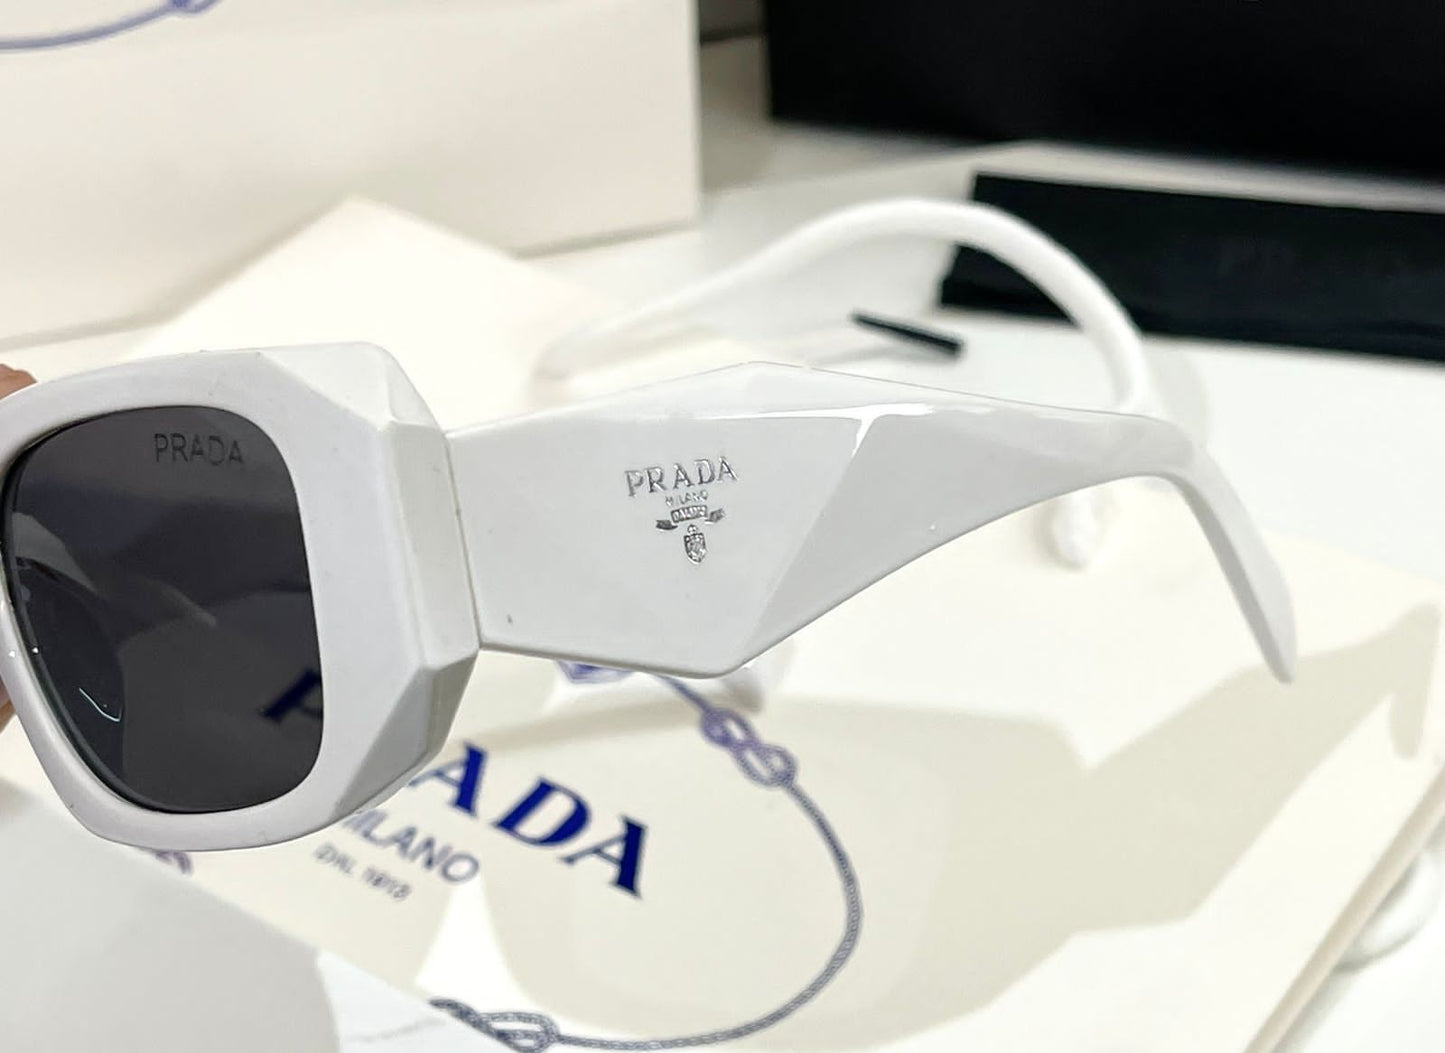 ARP Unisex Branded Sunglasses with Original Box